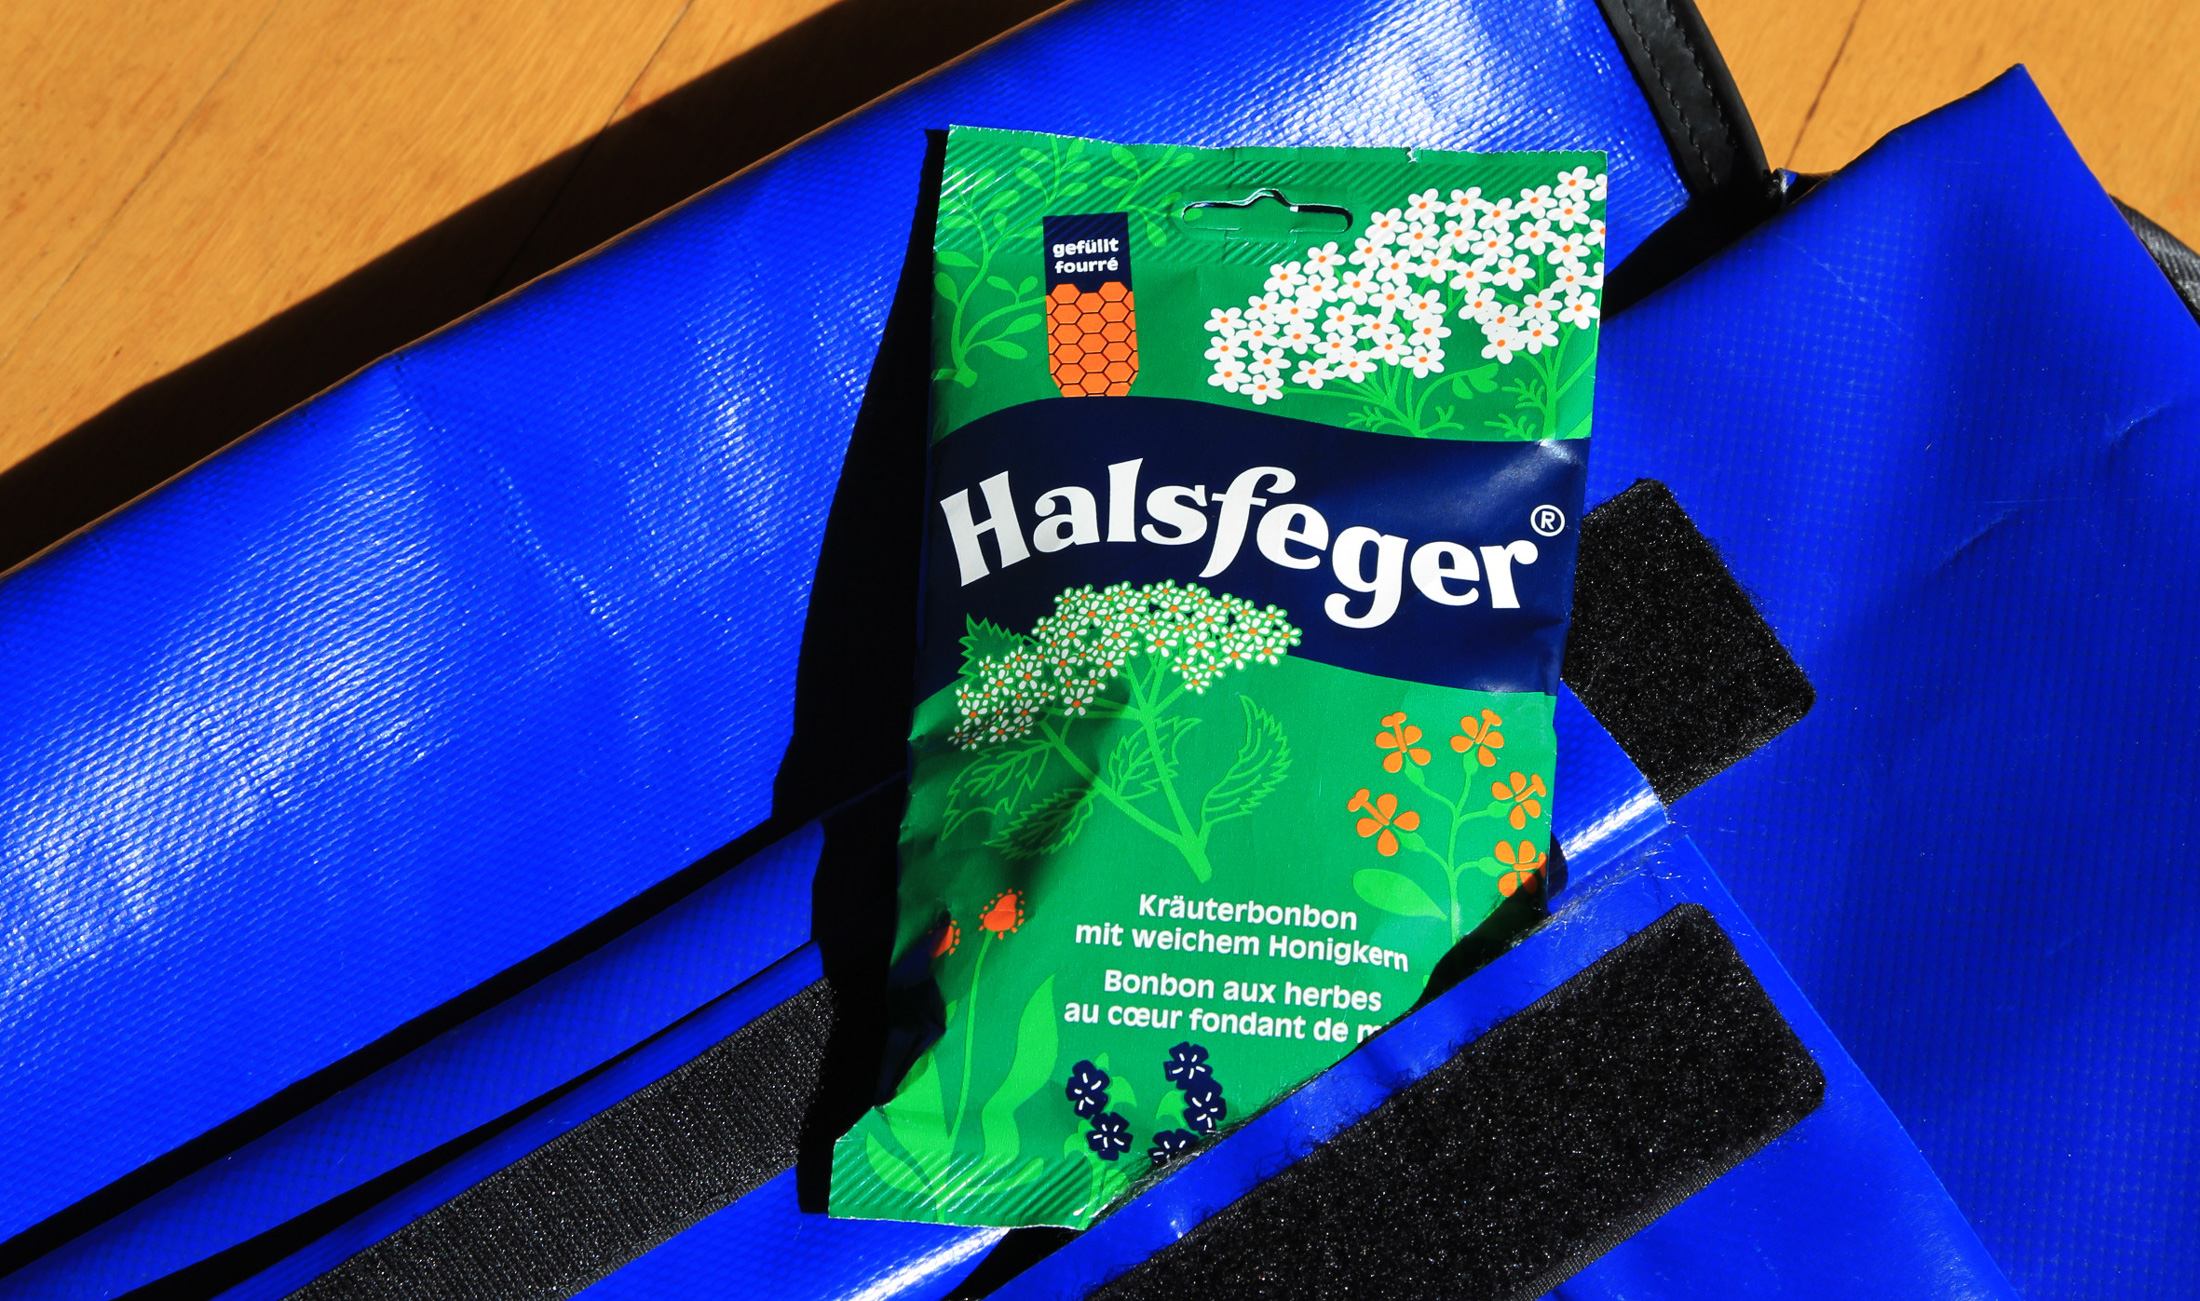 Halsfeger redesign packaging